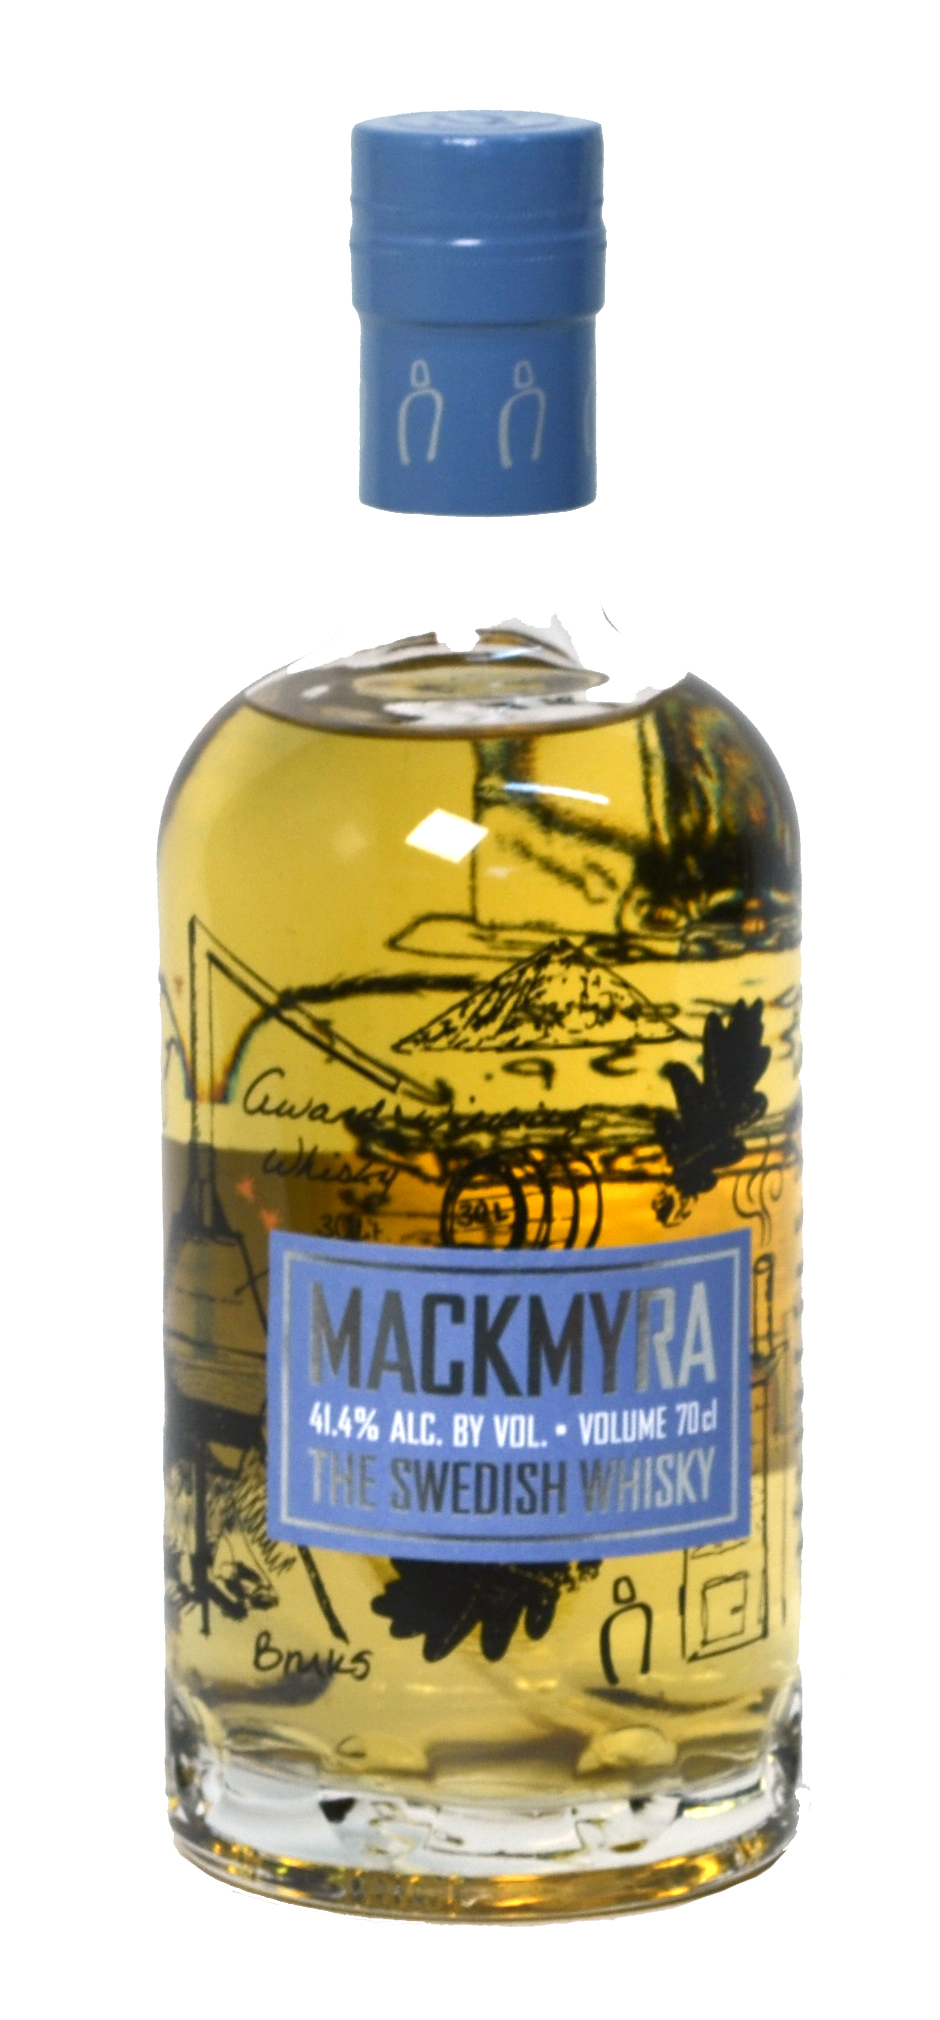 Mackmyra Bruks Whisky 41.4°